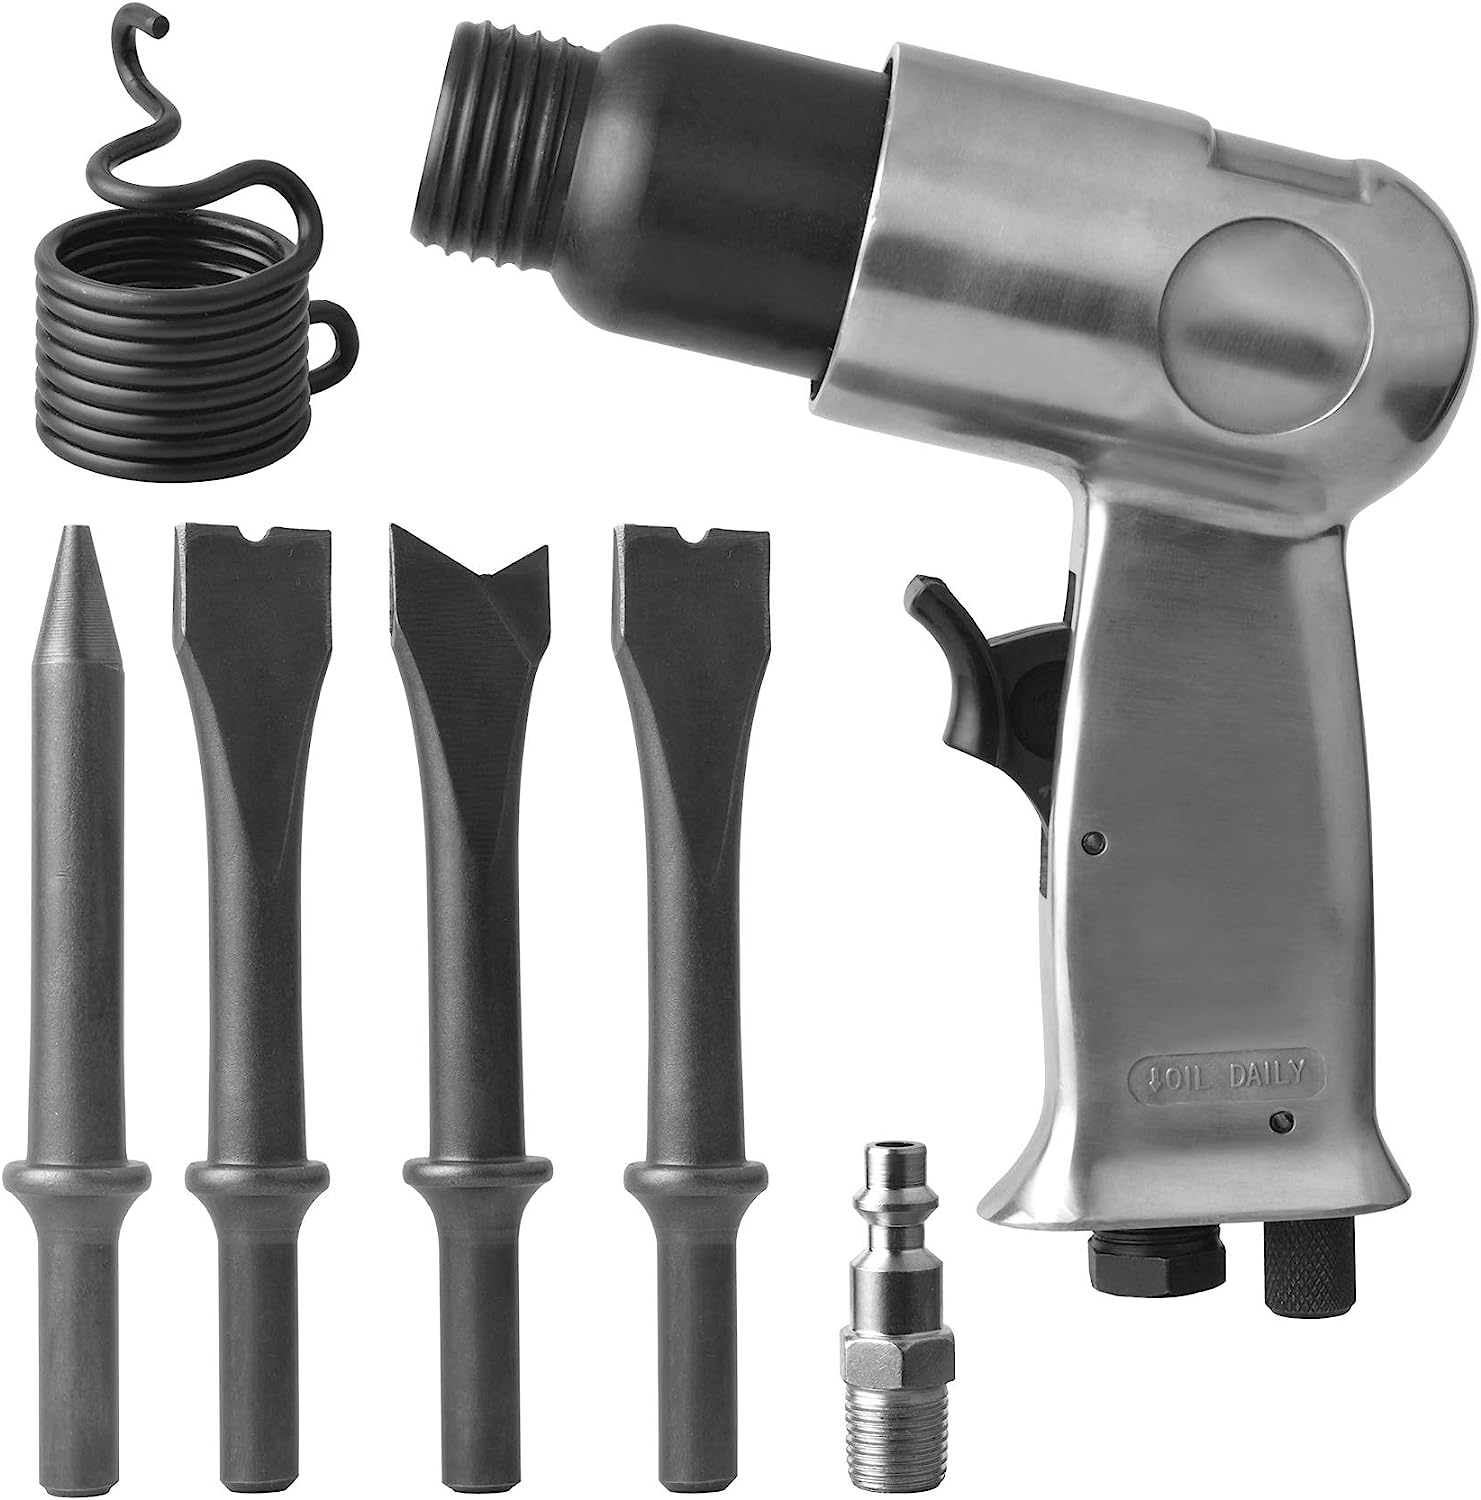 150mm air hammer kit 4-chisels, 4500 BPM, pneumatic [...]